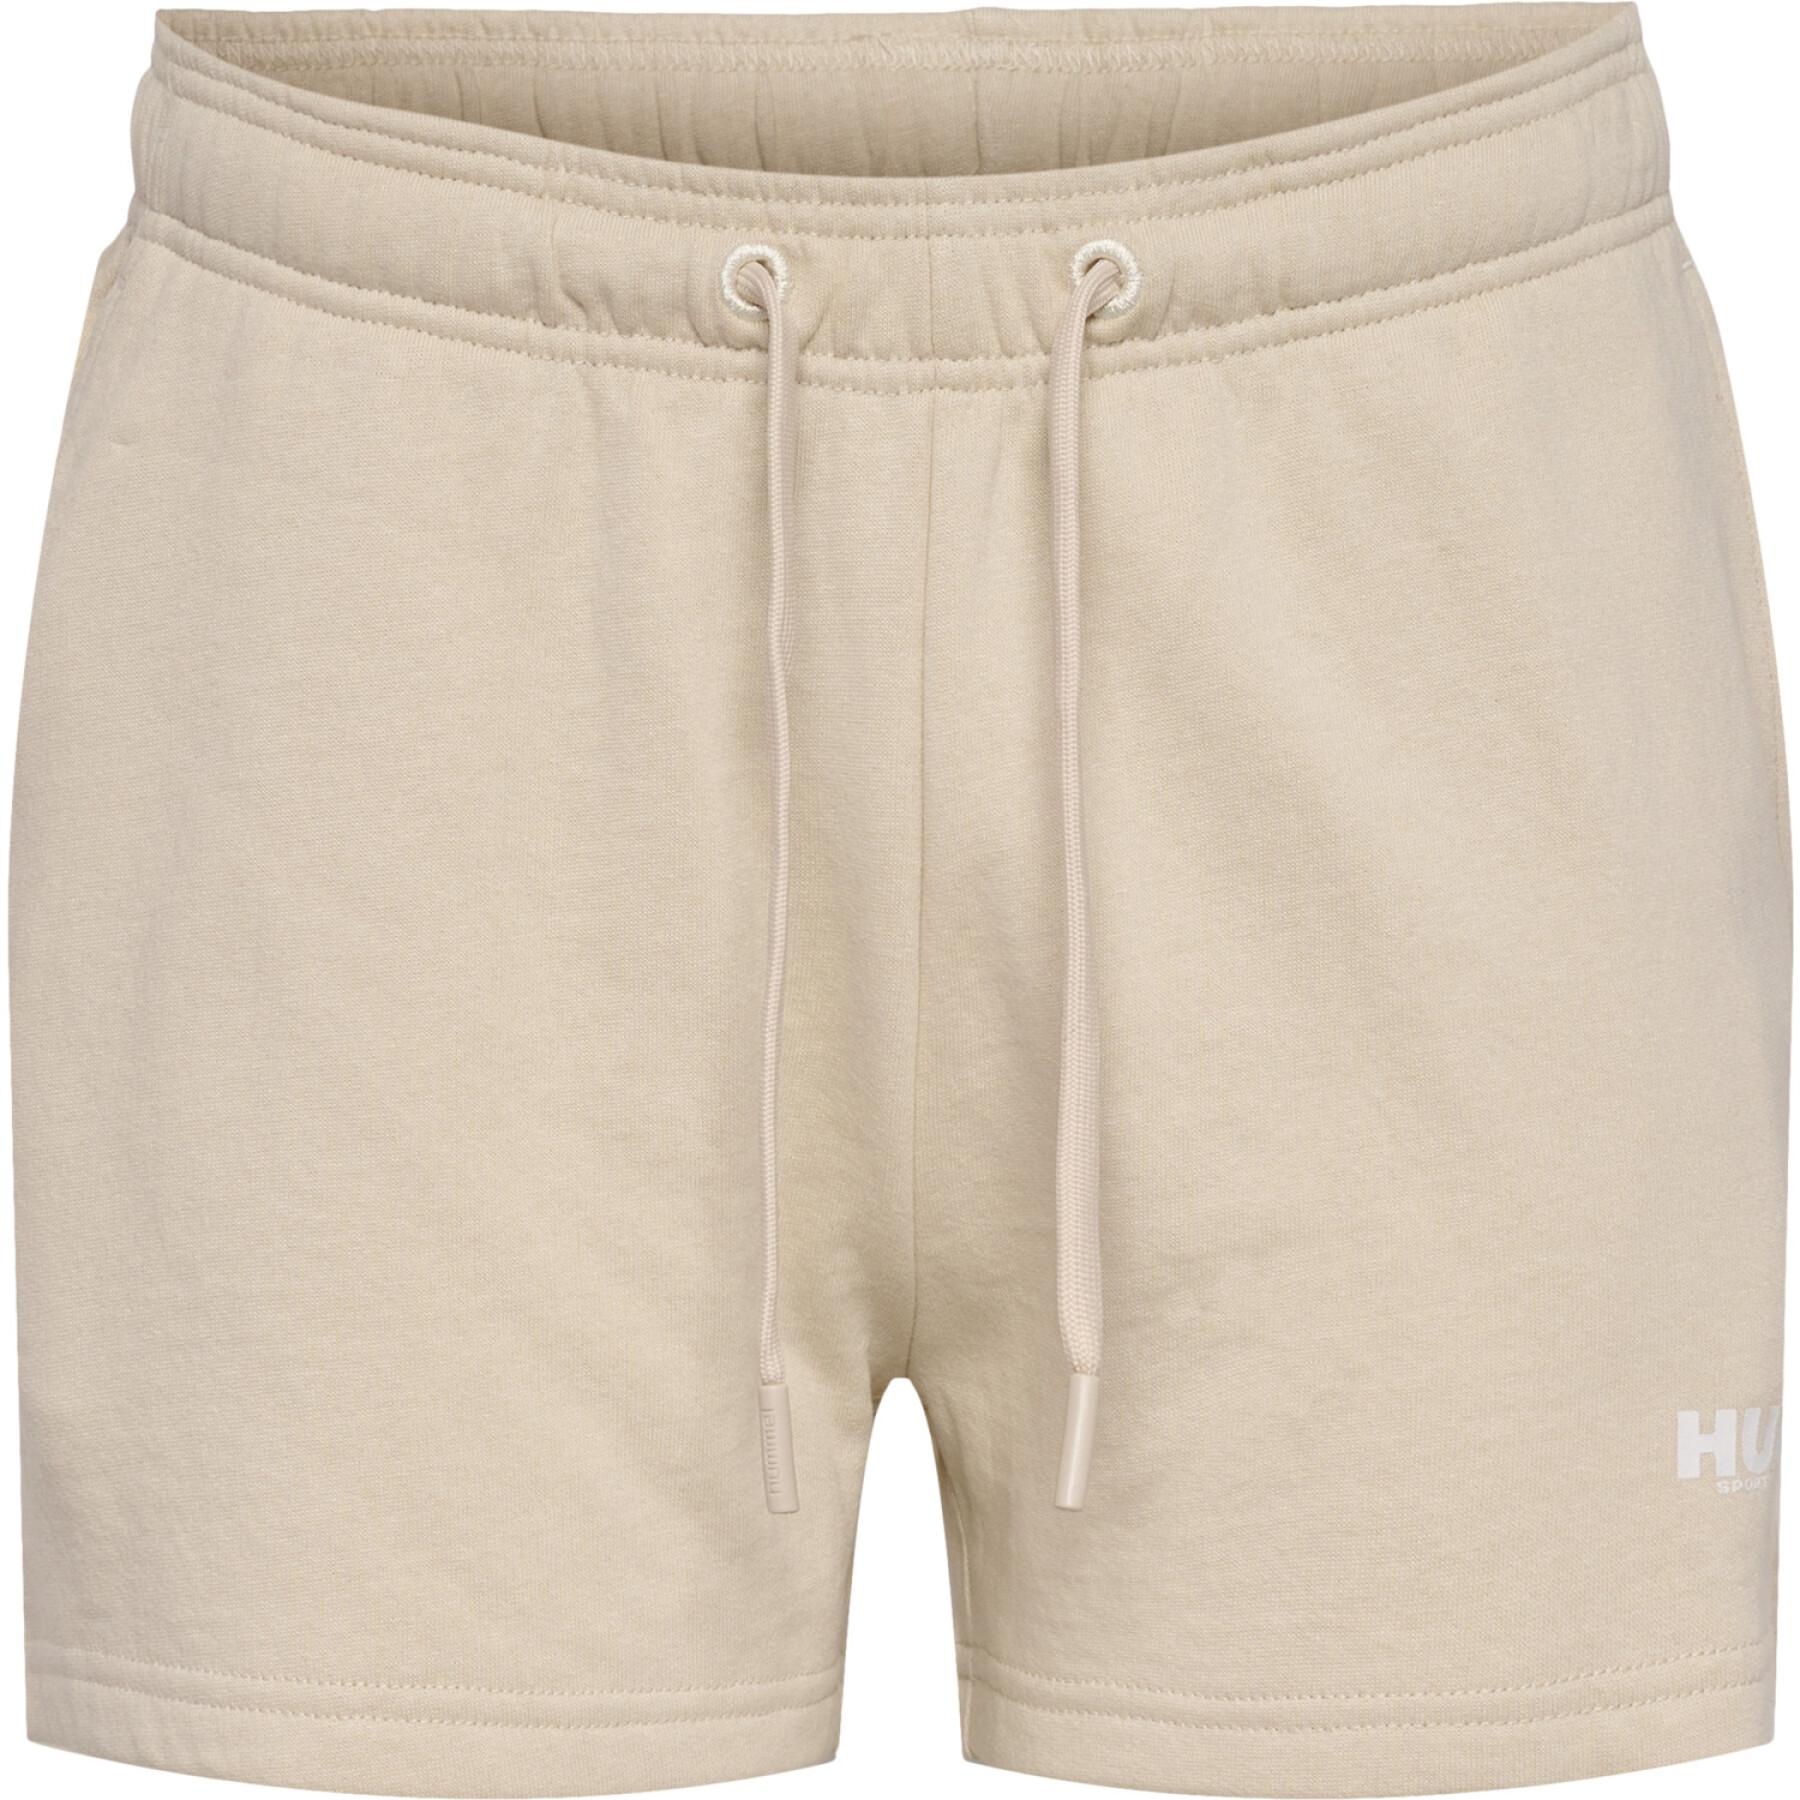 Legacy Women\'s Lifestyle - Hummel Brands Hummel shorts - -